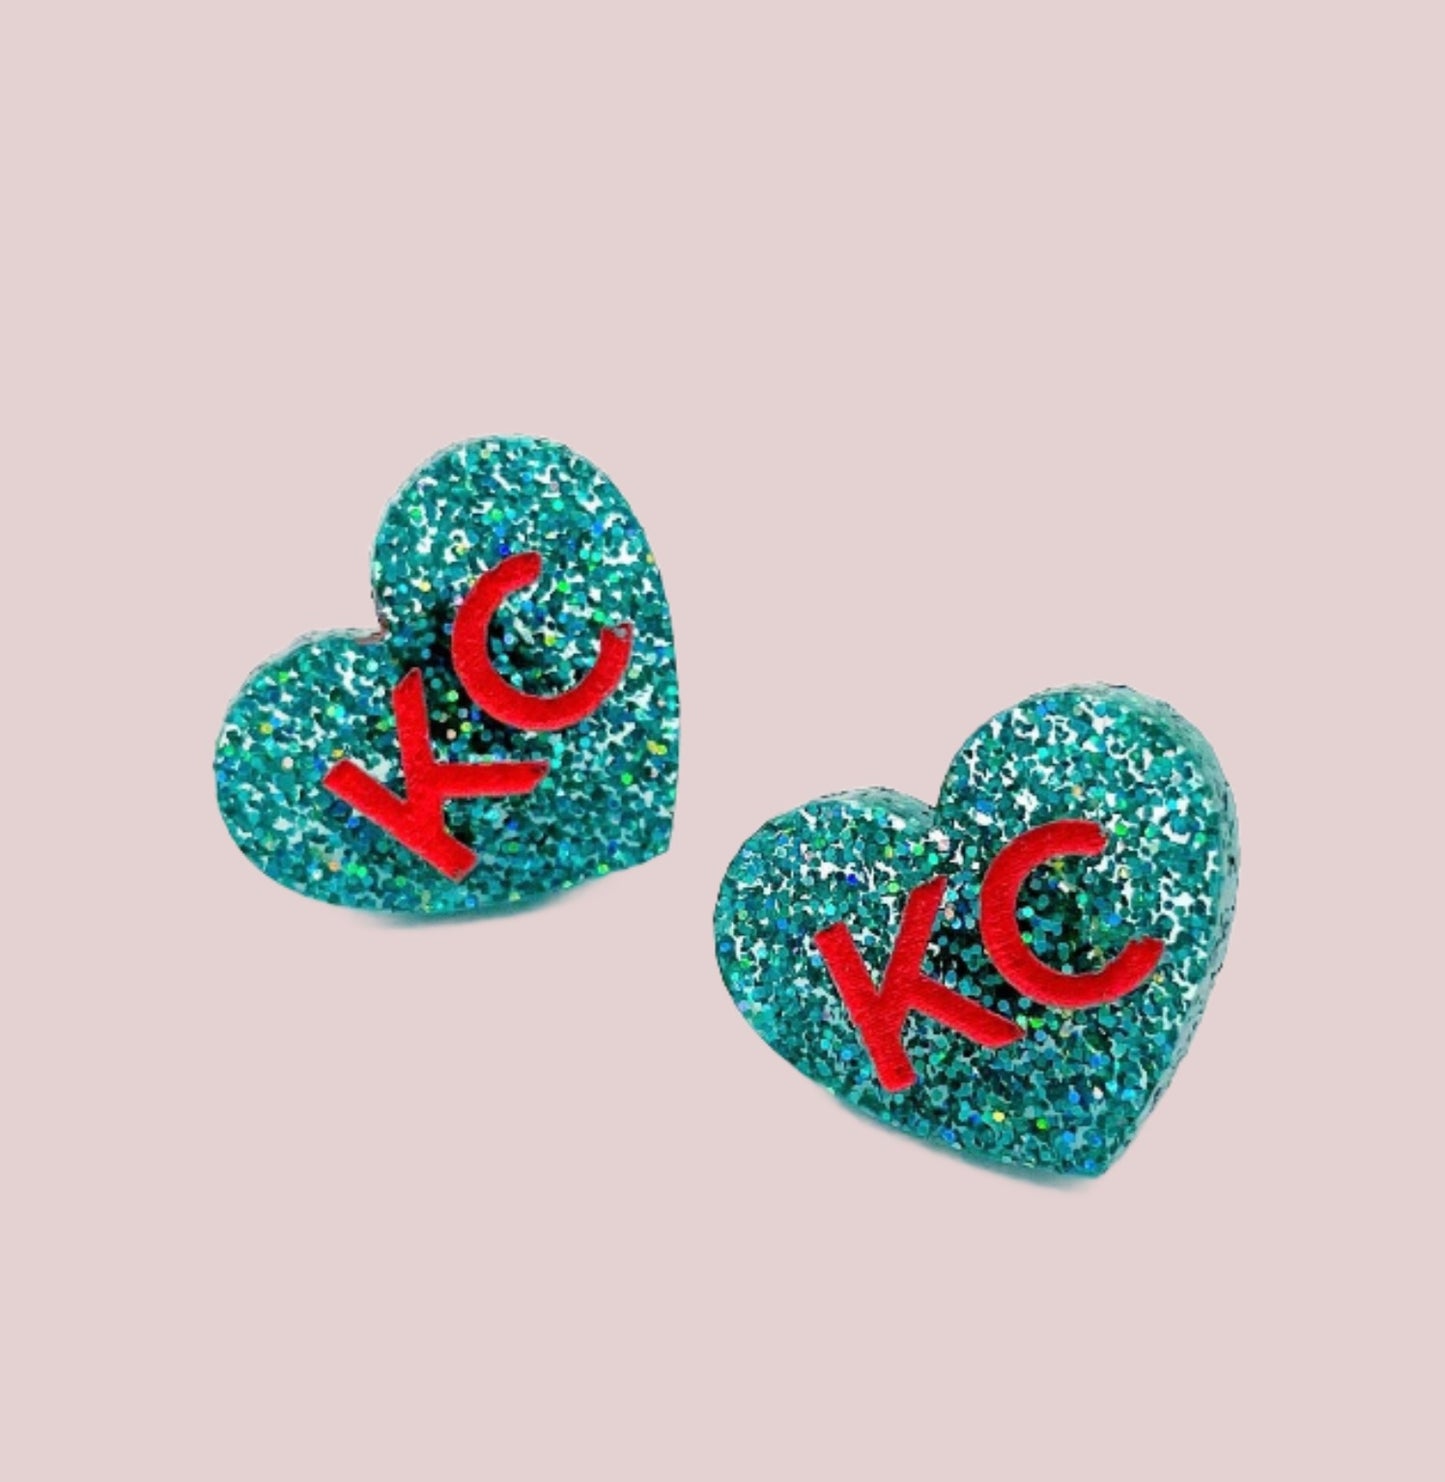 Kansas City KC Heart Stud Earrings - Aqua and Red